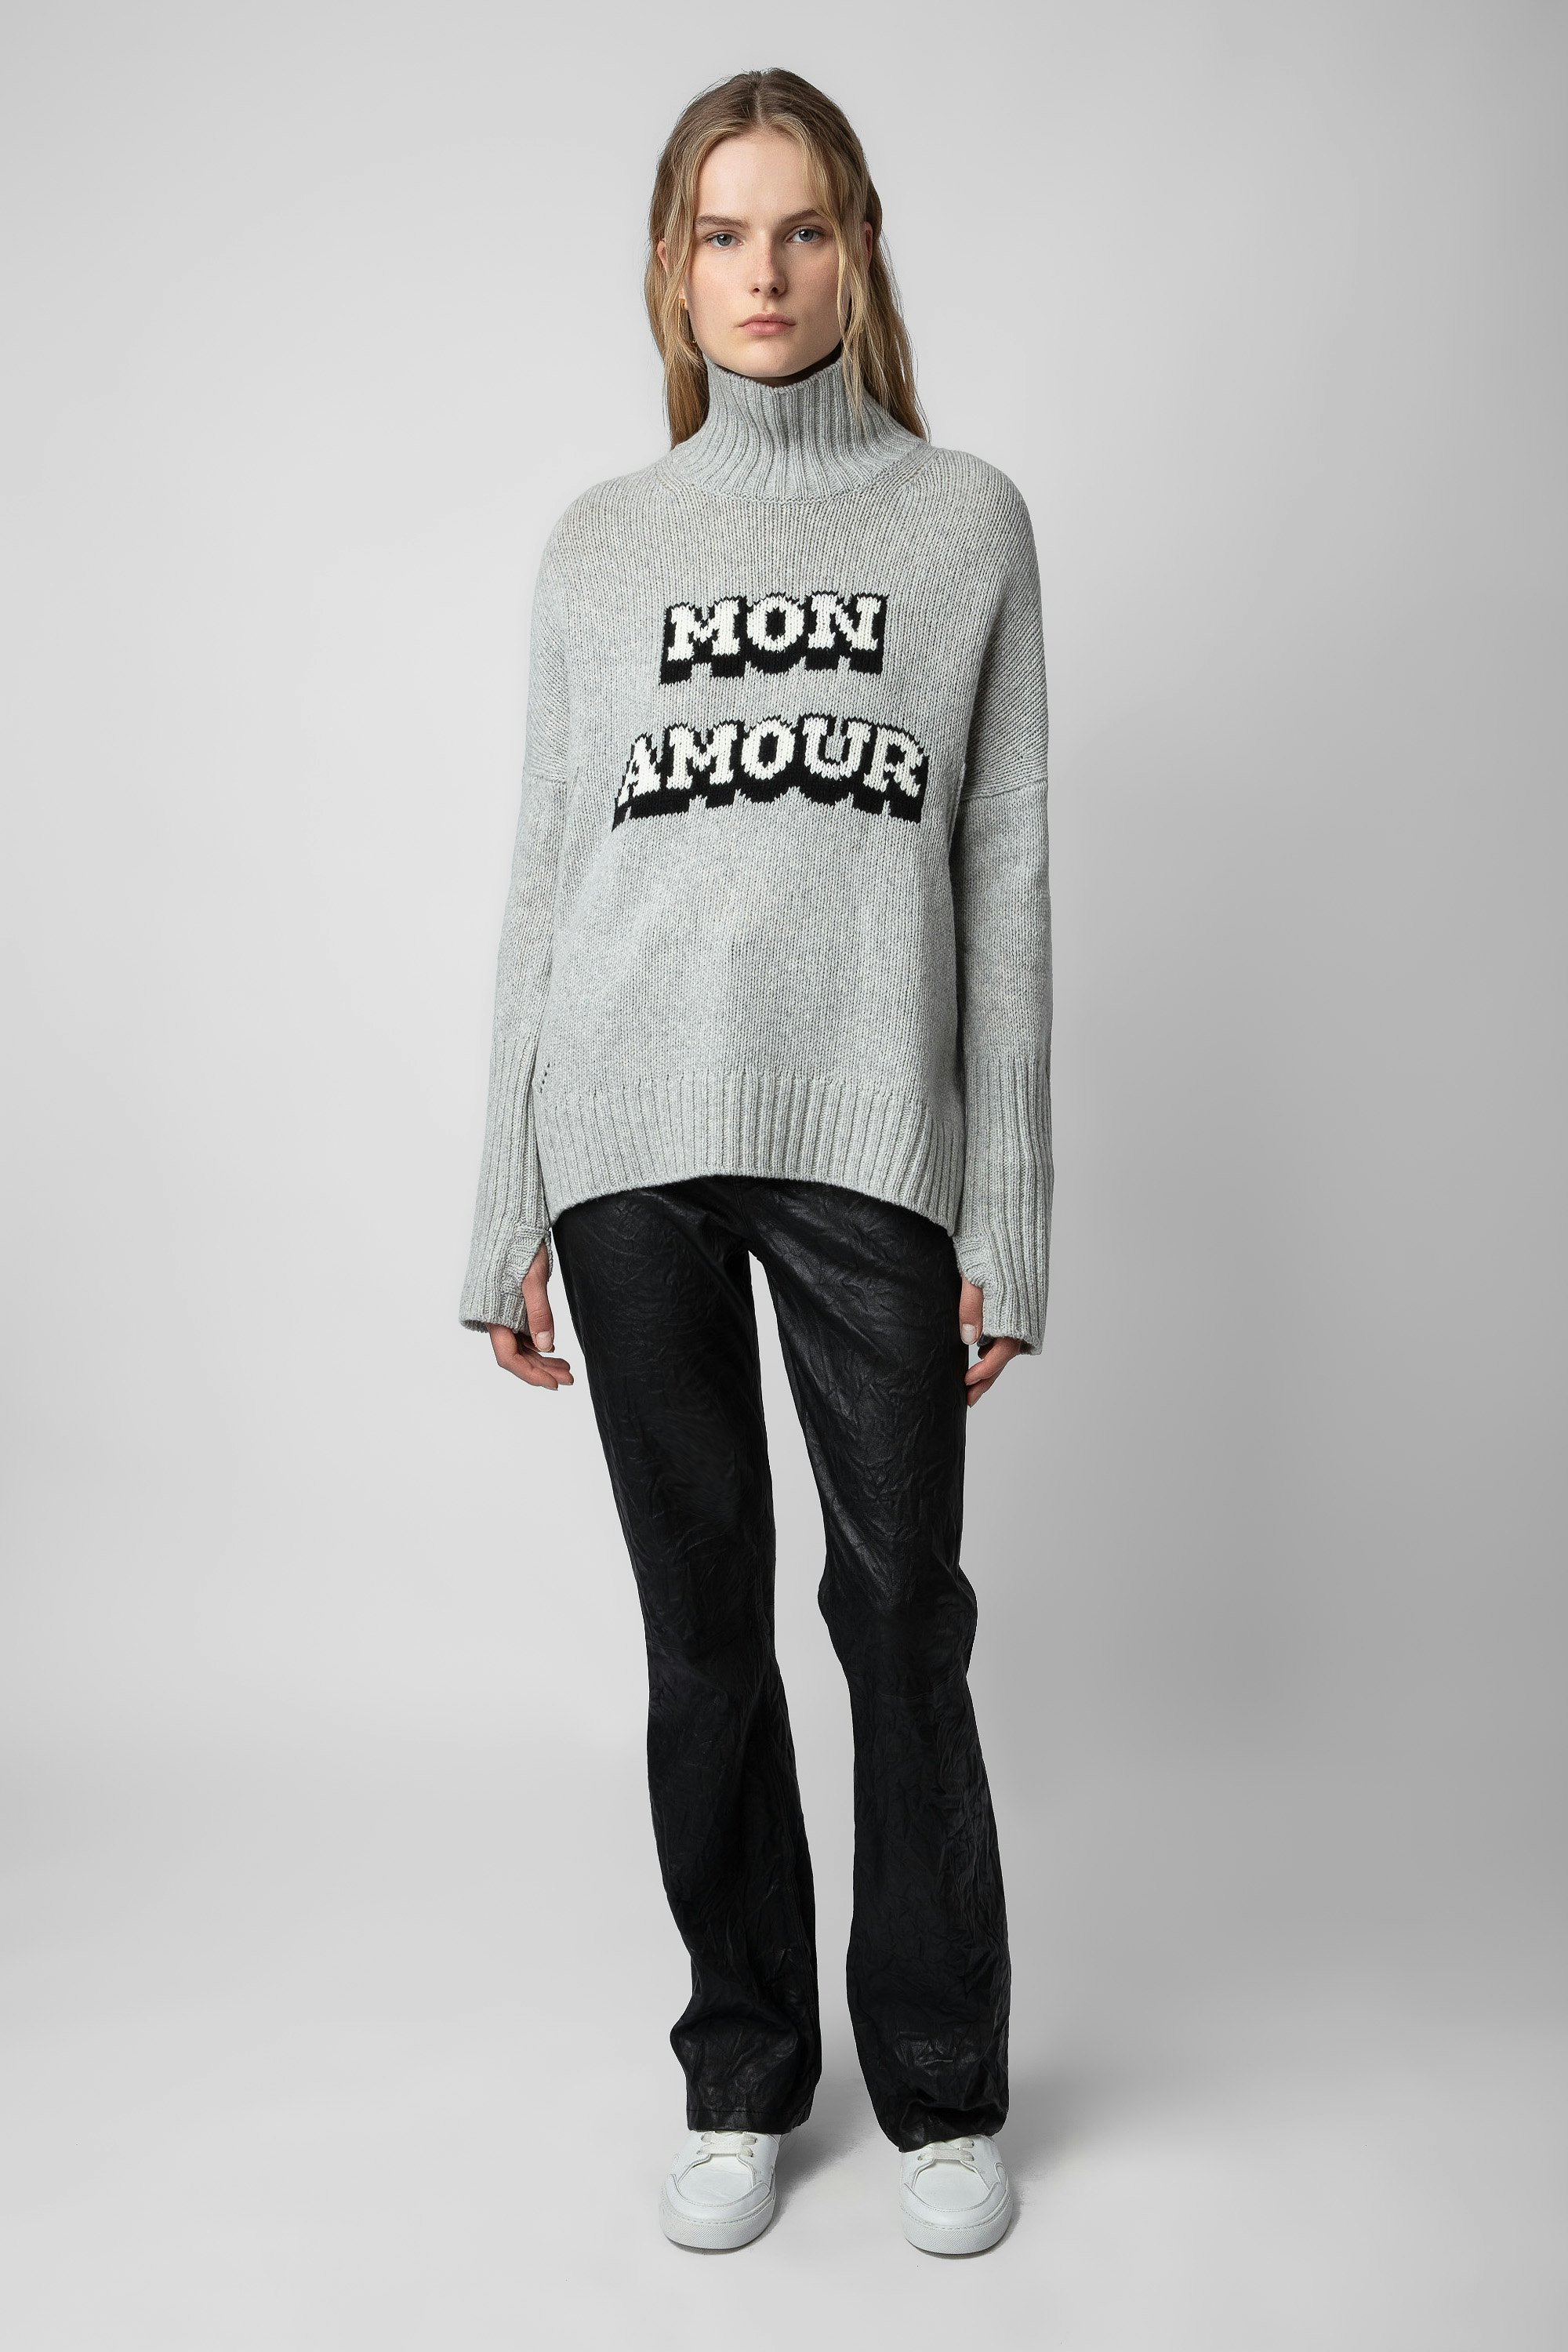 Alma Mon Amour Sweater - Women’s grey merino wool sweater with mock neckline and intarsia jacquard “Mon Amour” slogan.